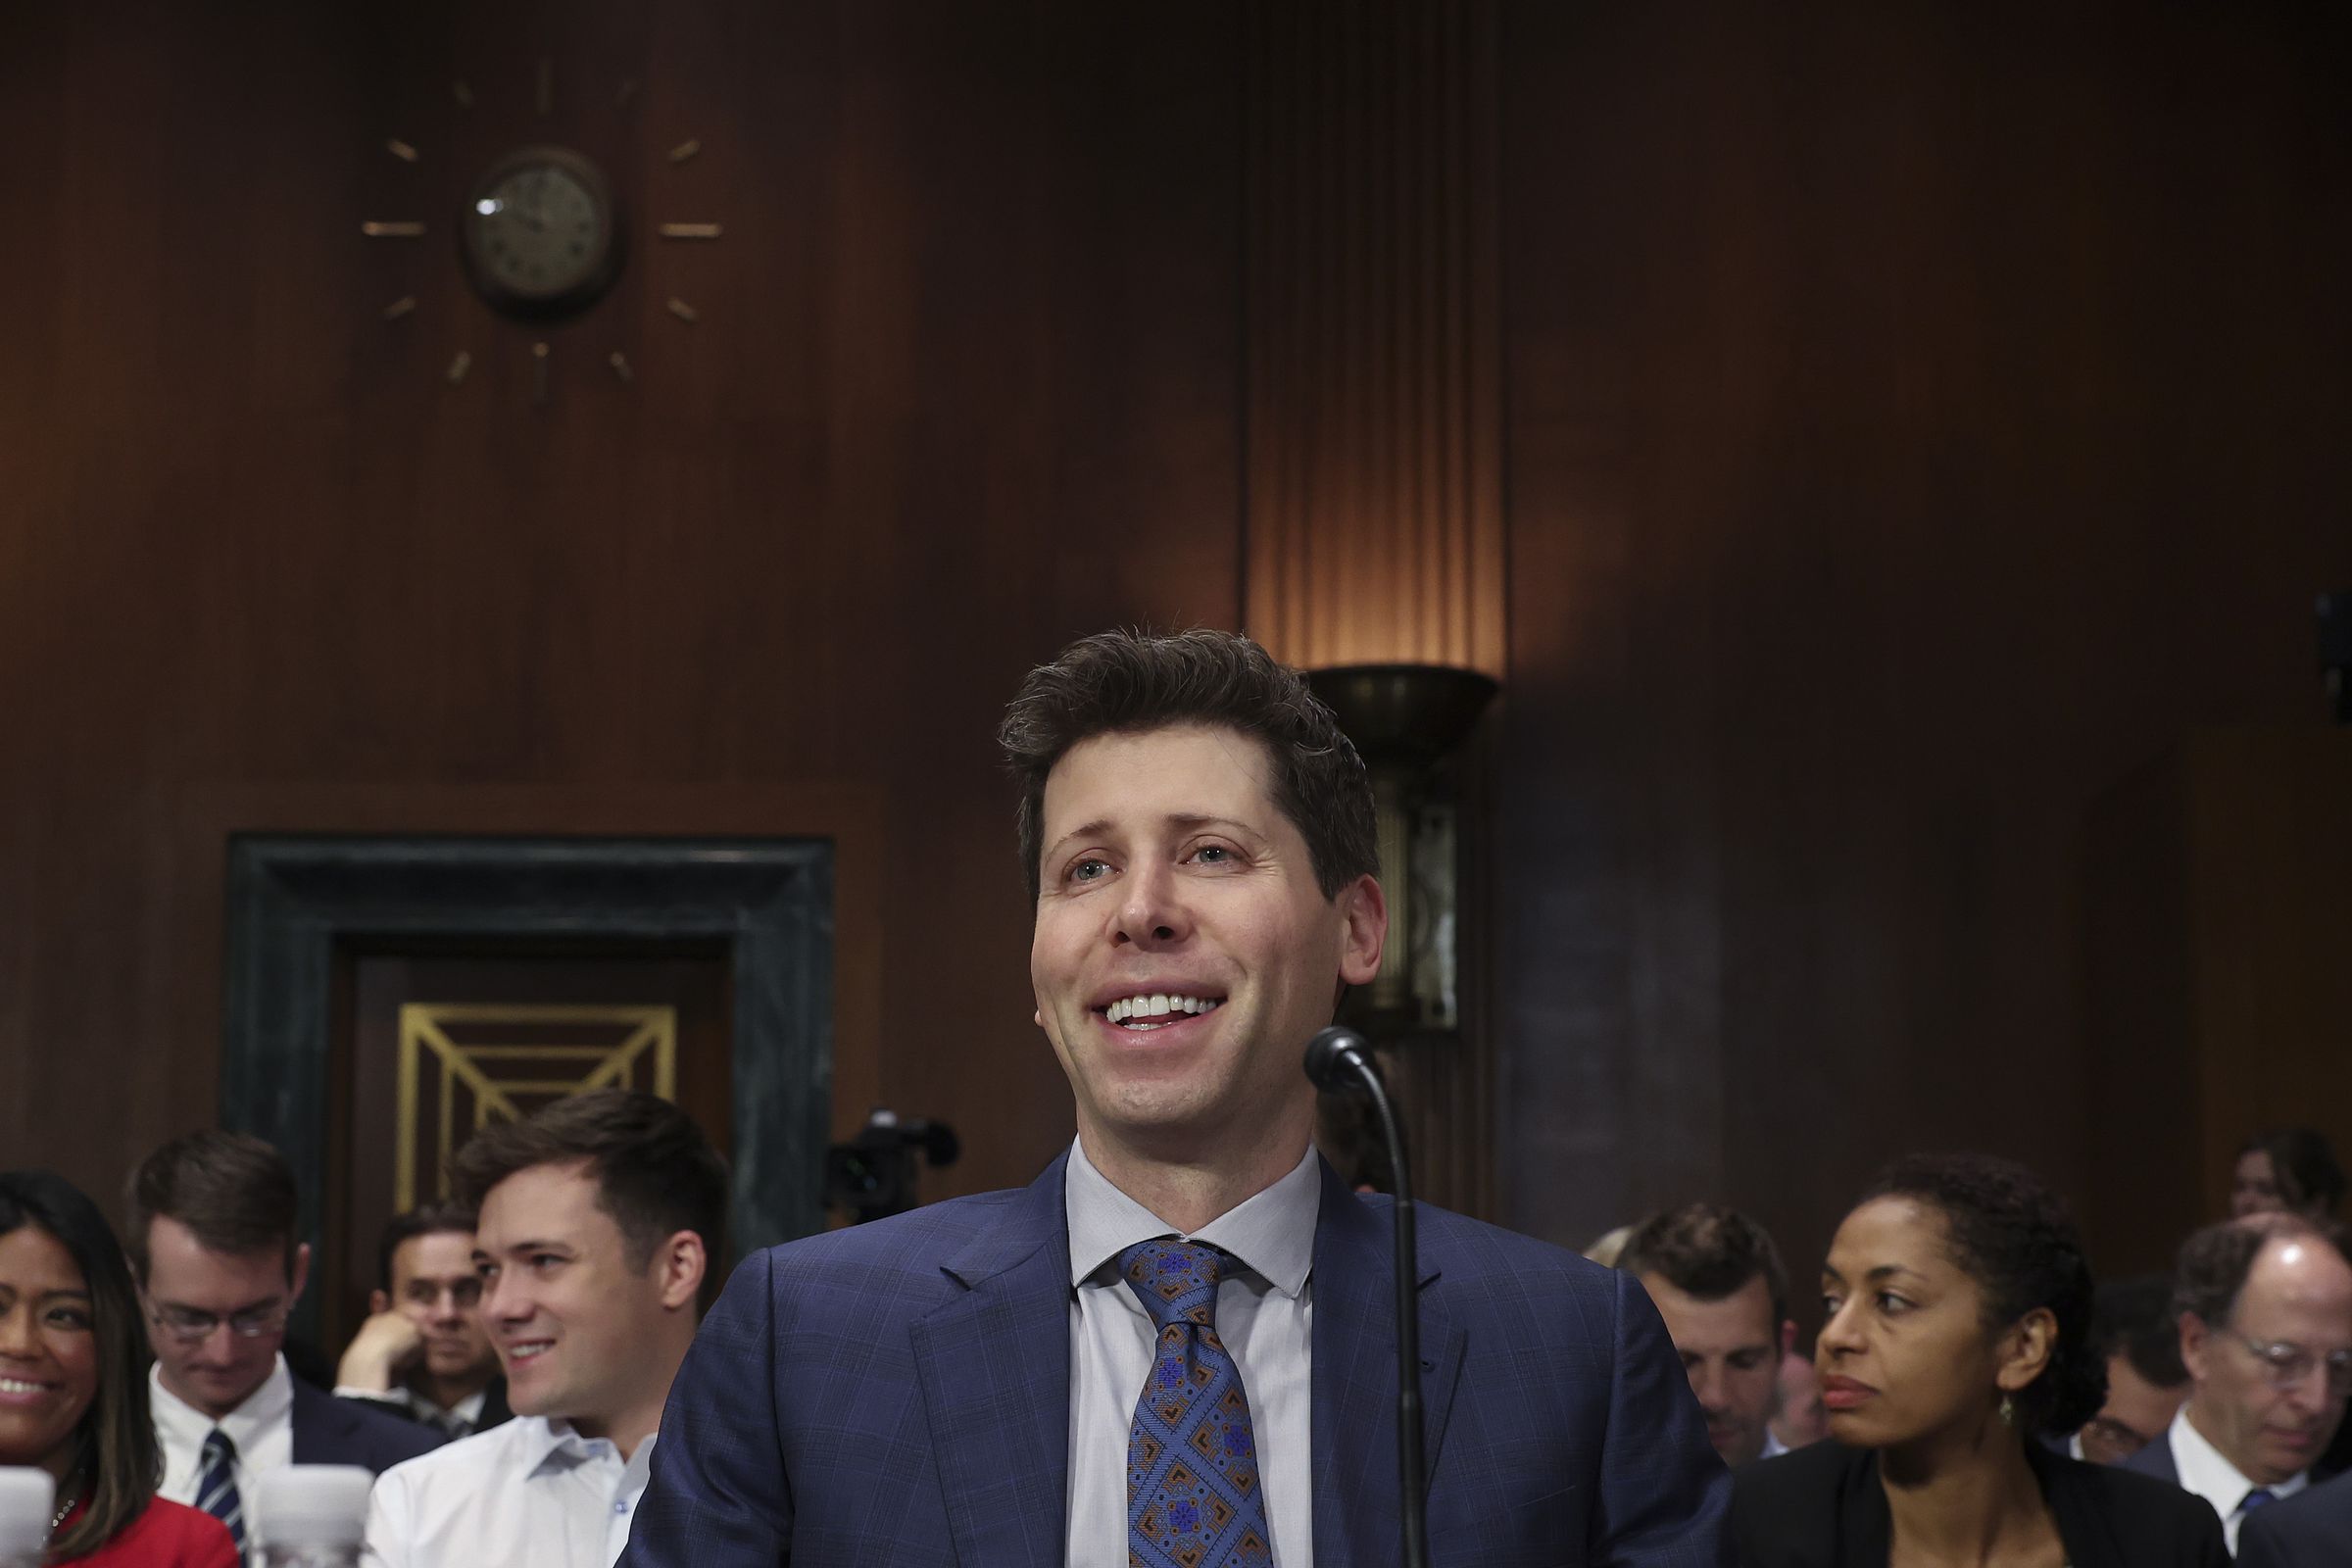 A photograph of Altman smiling broadly at the senate hearing.